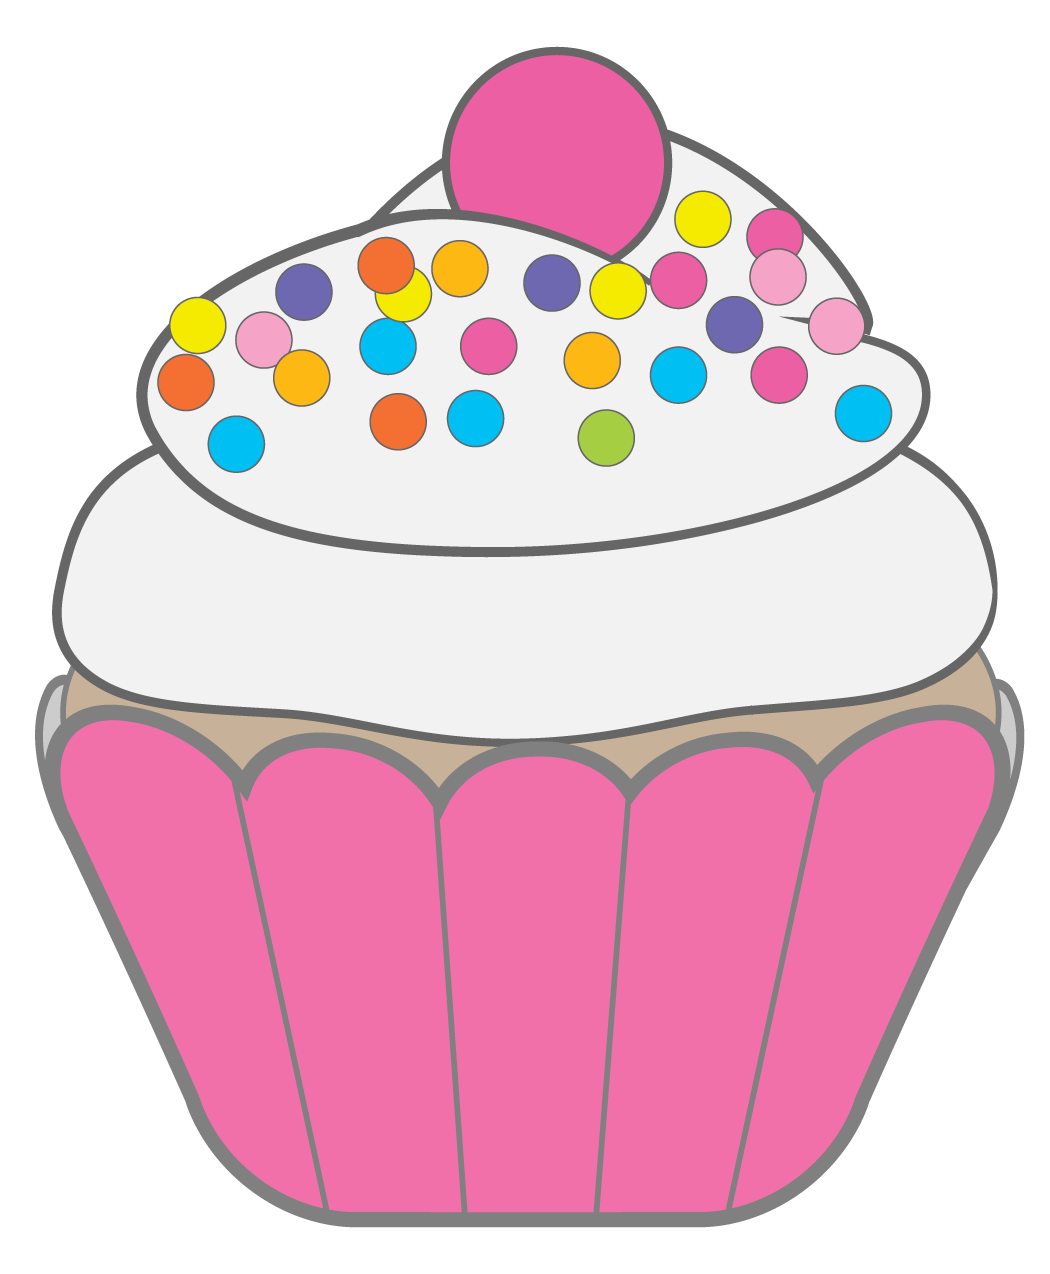 Cupcakes on clip art cupcake and cartoon cupcakes clipartix ...